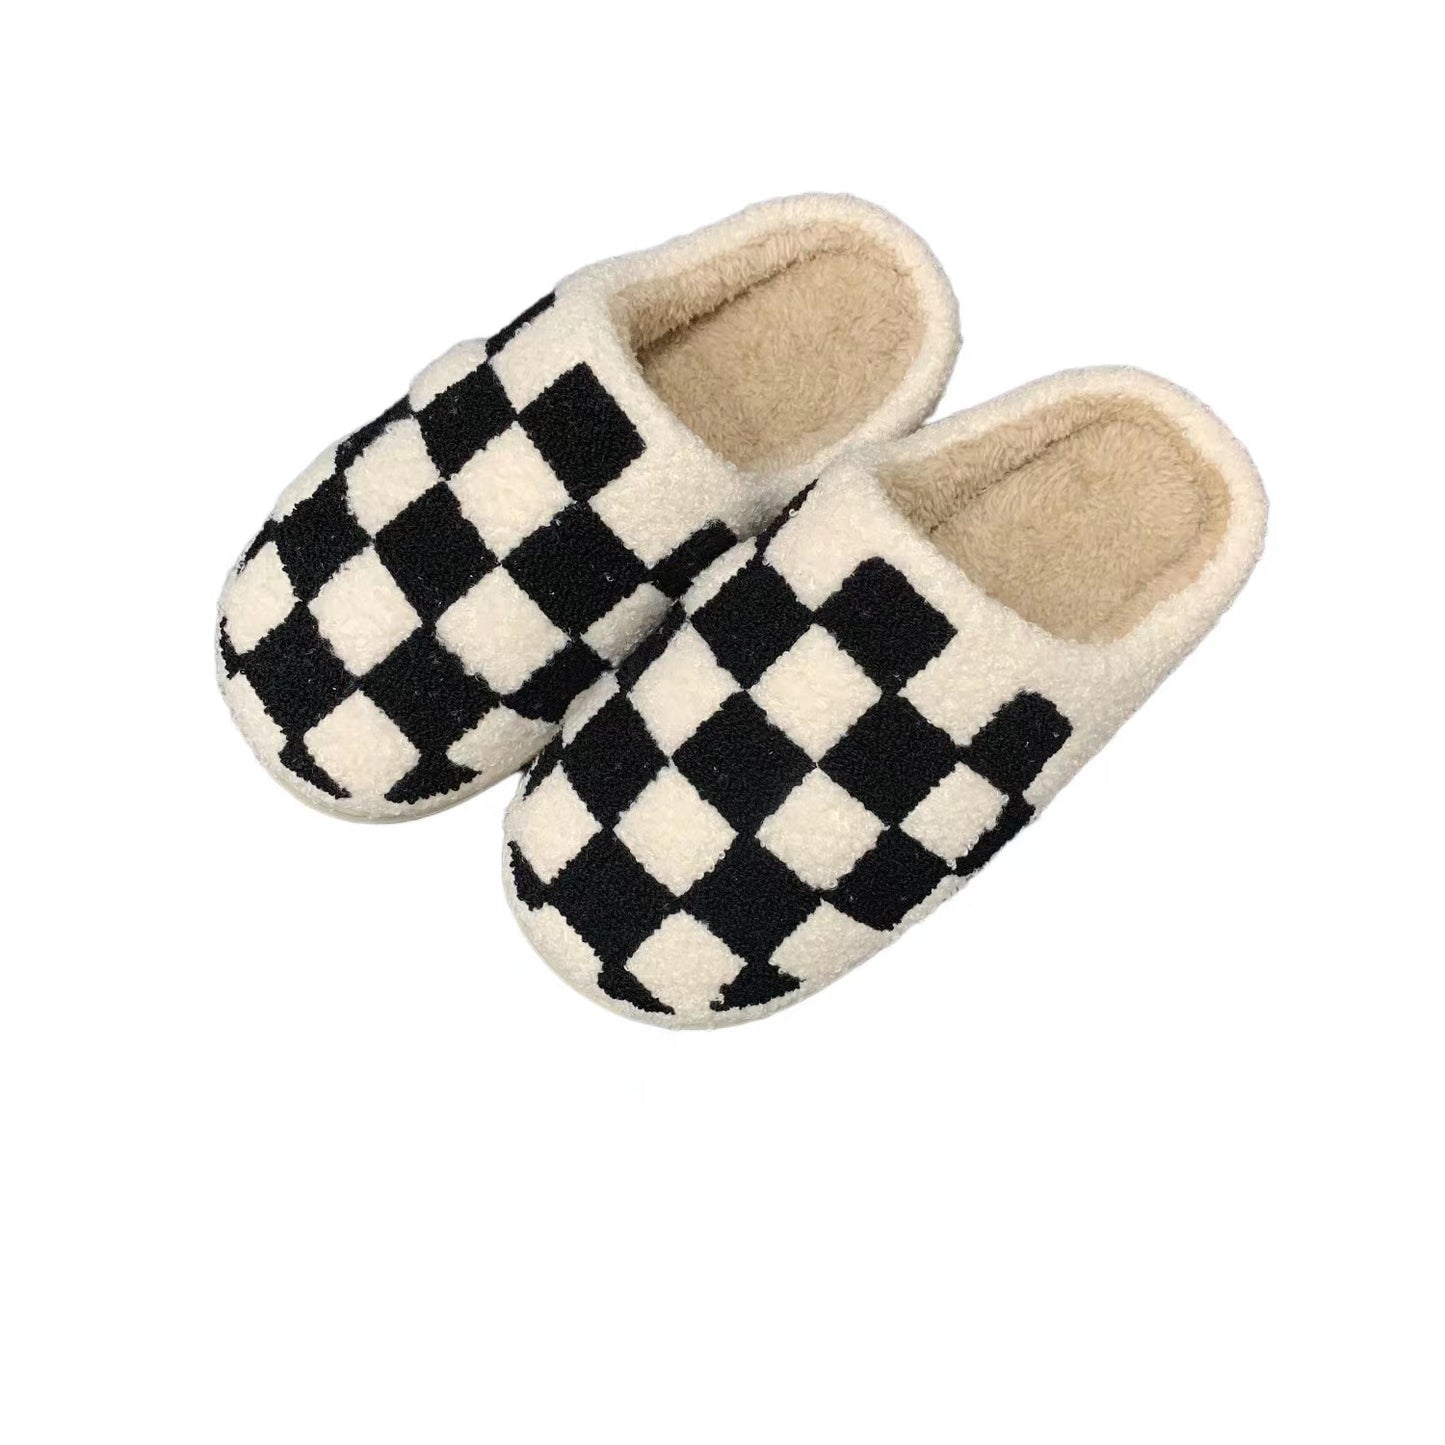 Checkerboard Print Preppy Aesthetic Cozy Slippers